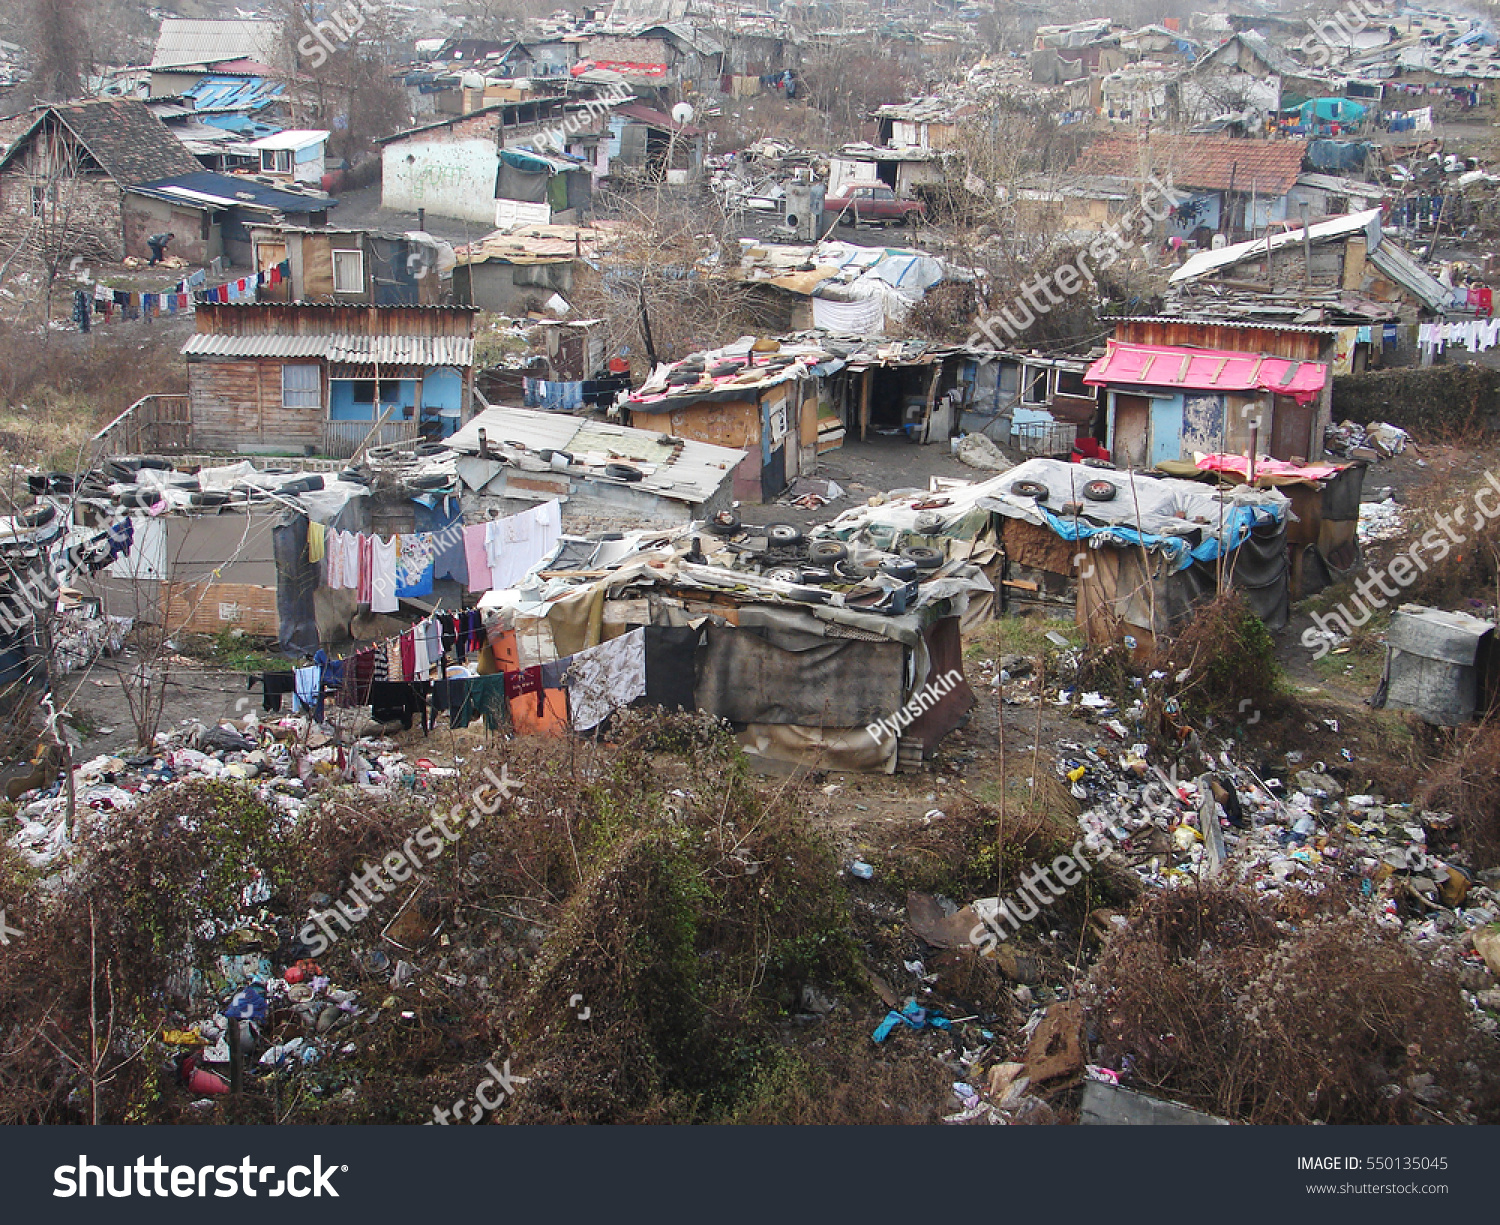 Gypsy slum favela in Belgrade, Serbia, town city urban settlement, poverty, garbage junkyard, houses and shacks made of wood or metal, Coronavirus COVID-19 pandemic epidemic crisis outbreak, hygiene #550135045